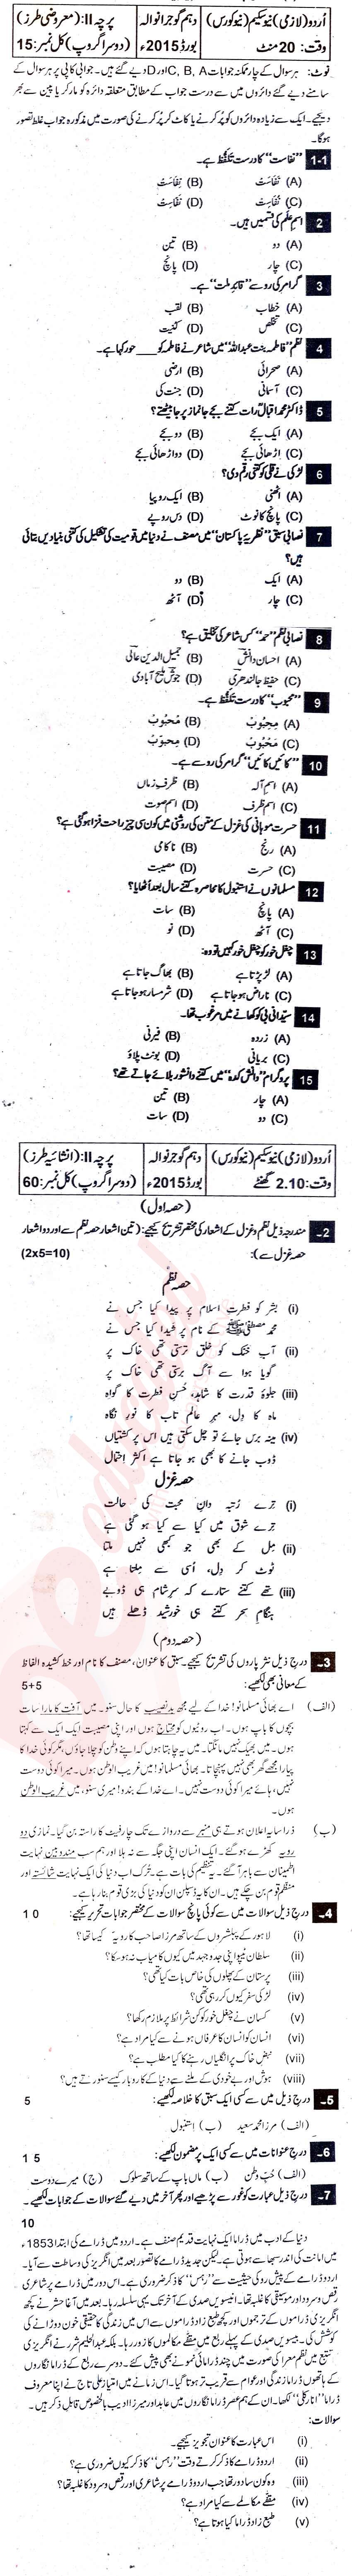 Urdu 10th class Past Paper Group 2 BISE Gujranwala 2015